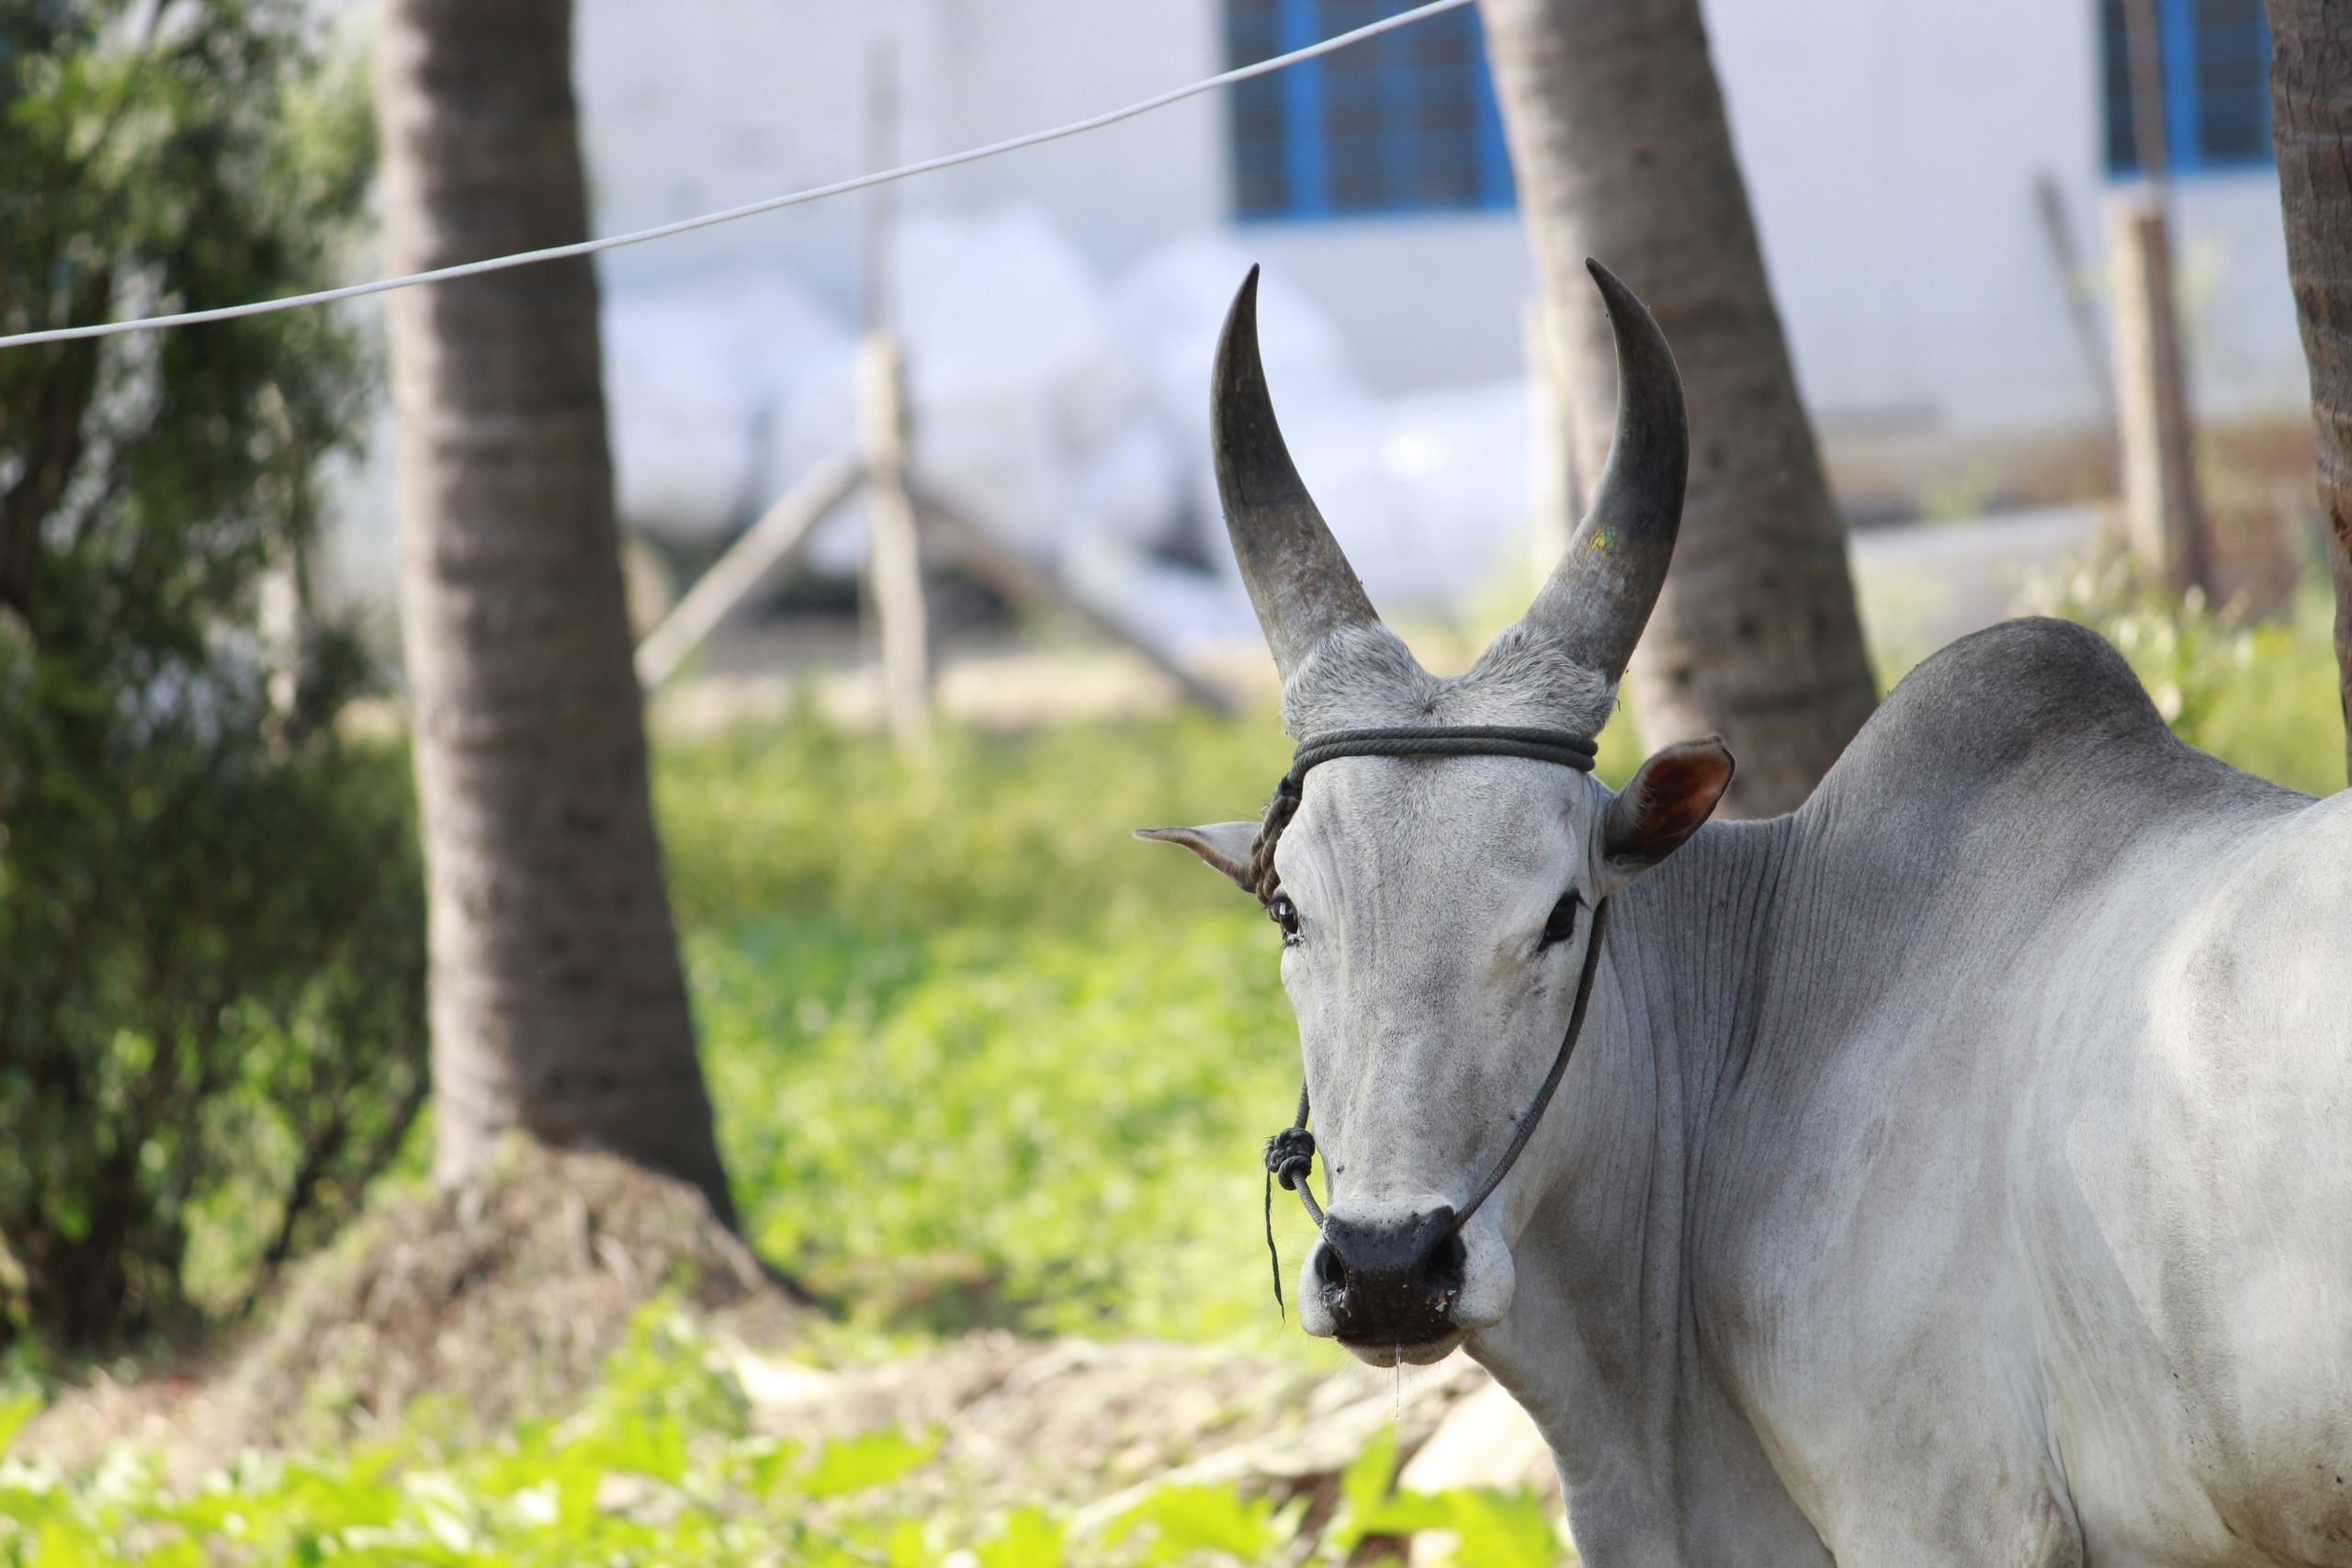 A pet bull with sharp horns